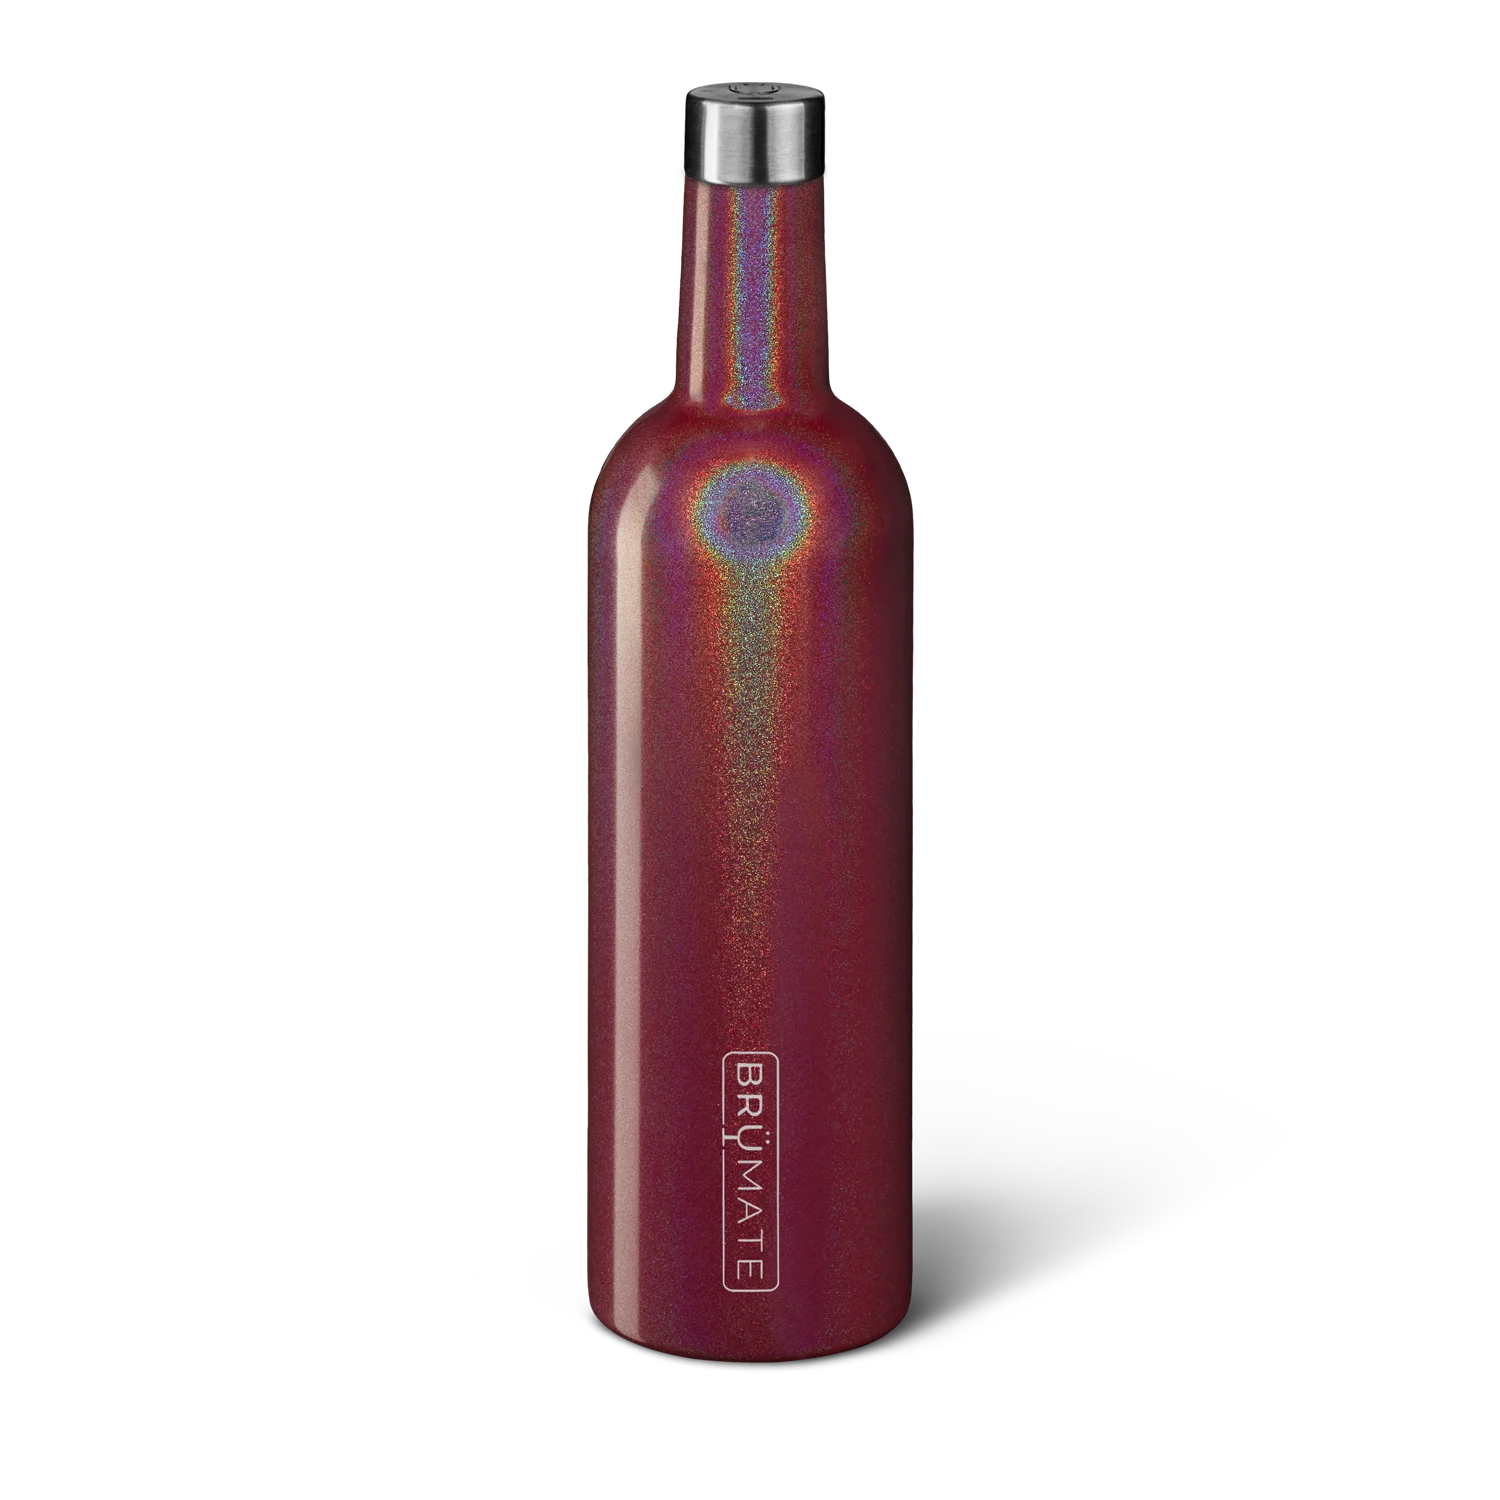 BRUMATE- Winesulator 25oz Glitter Merlot